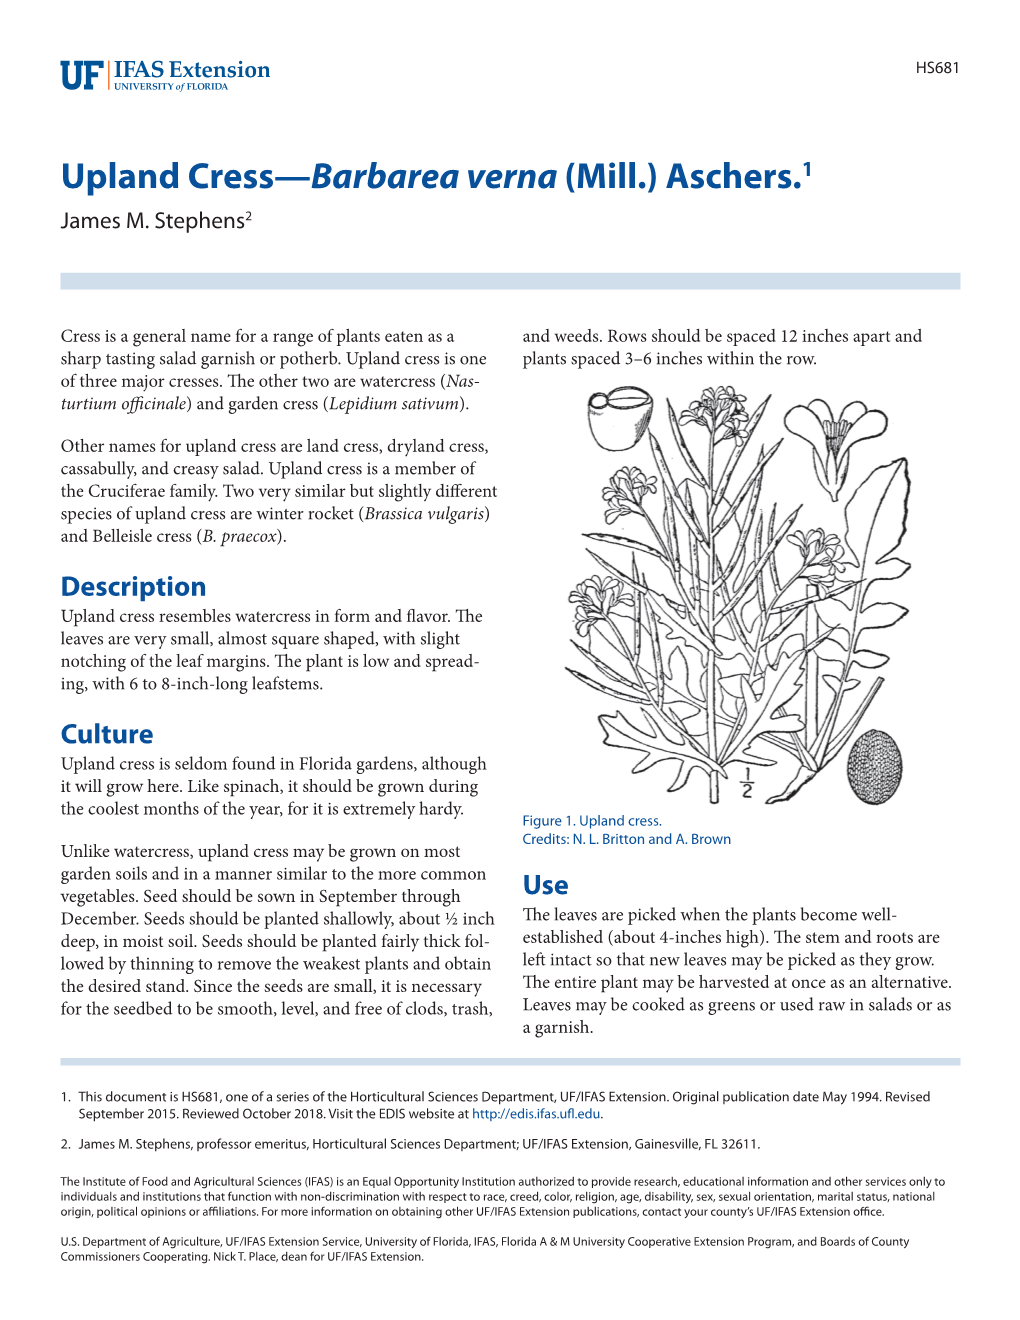 Upland Cress—Barbarea Verna (Mill.) Aschers.1 James M